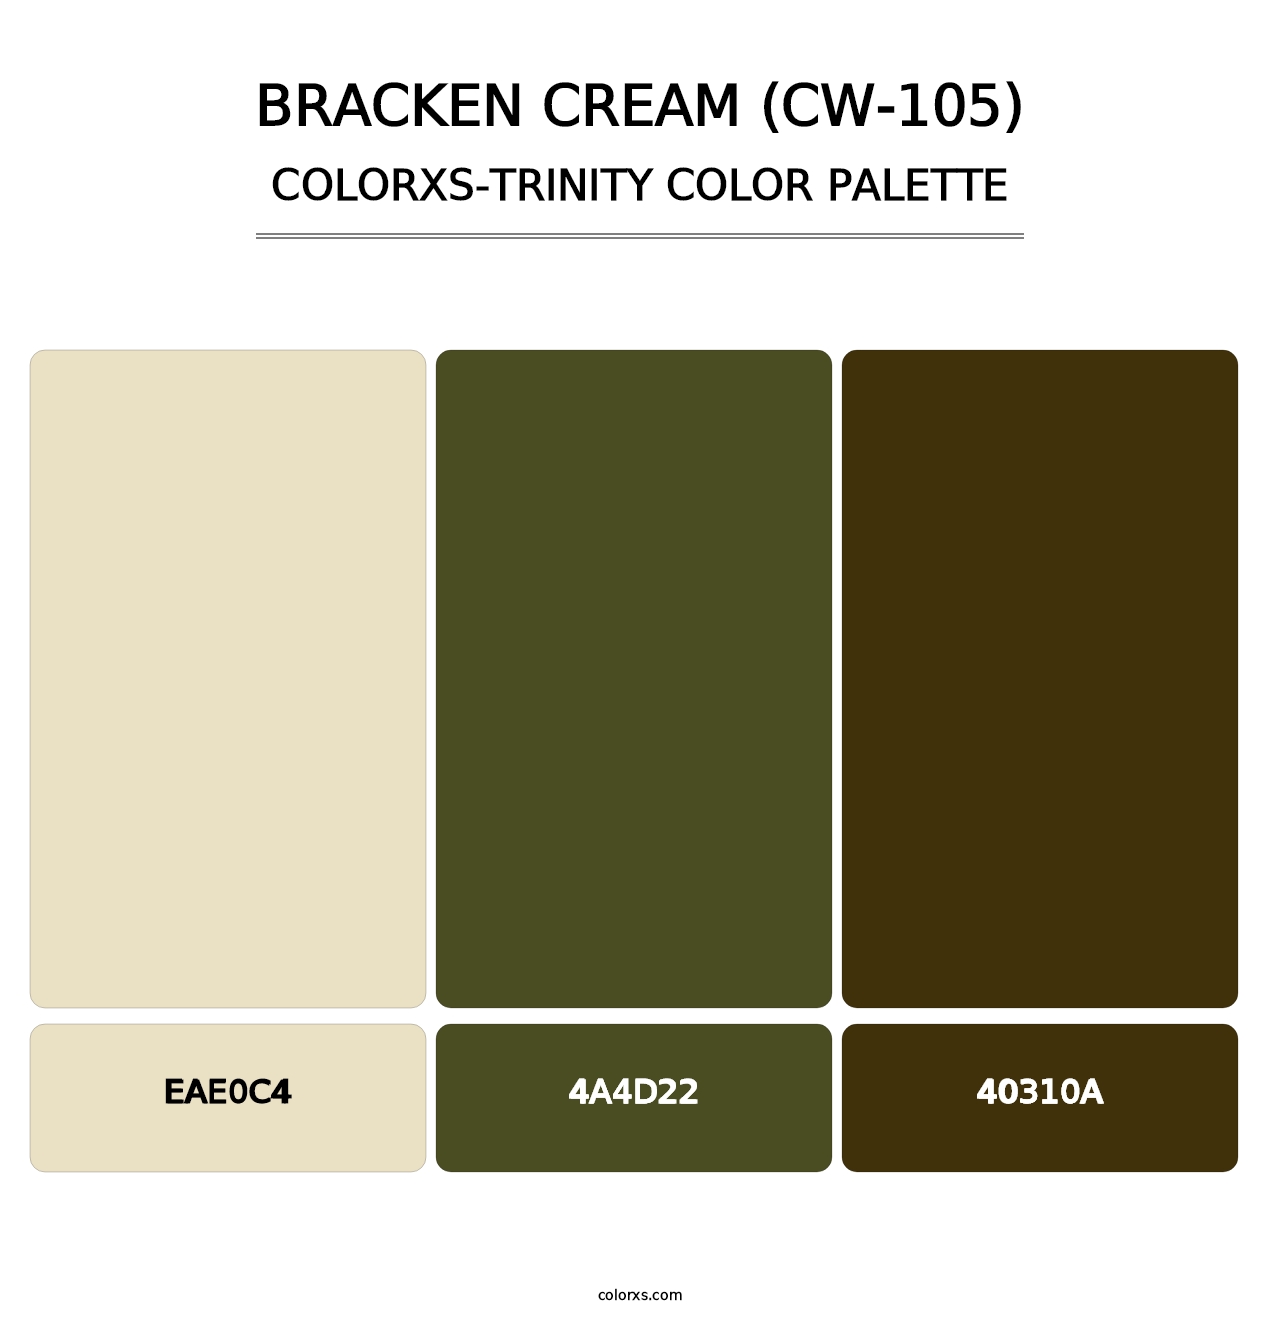 Bracken Cream (CW-105) - Colorxs Trinity Palette